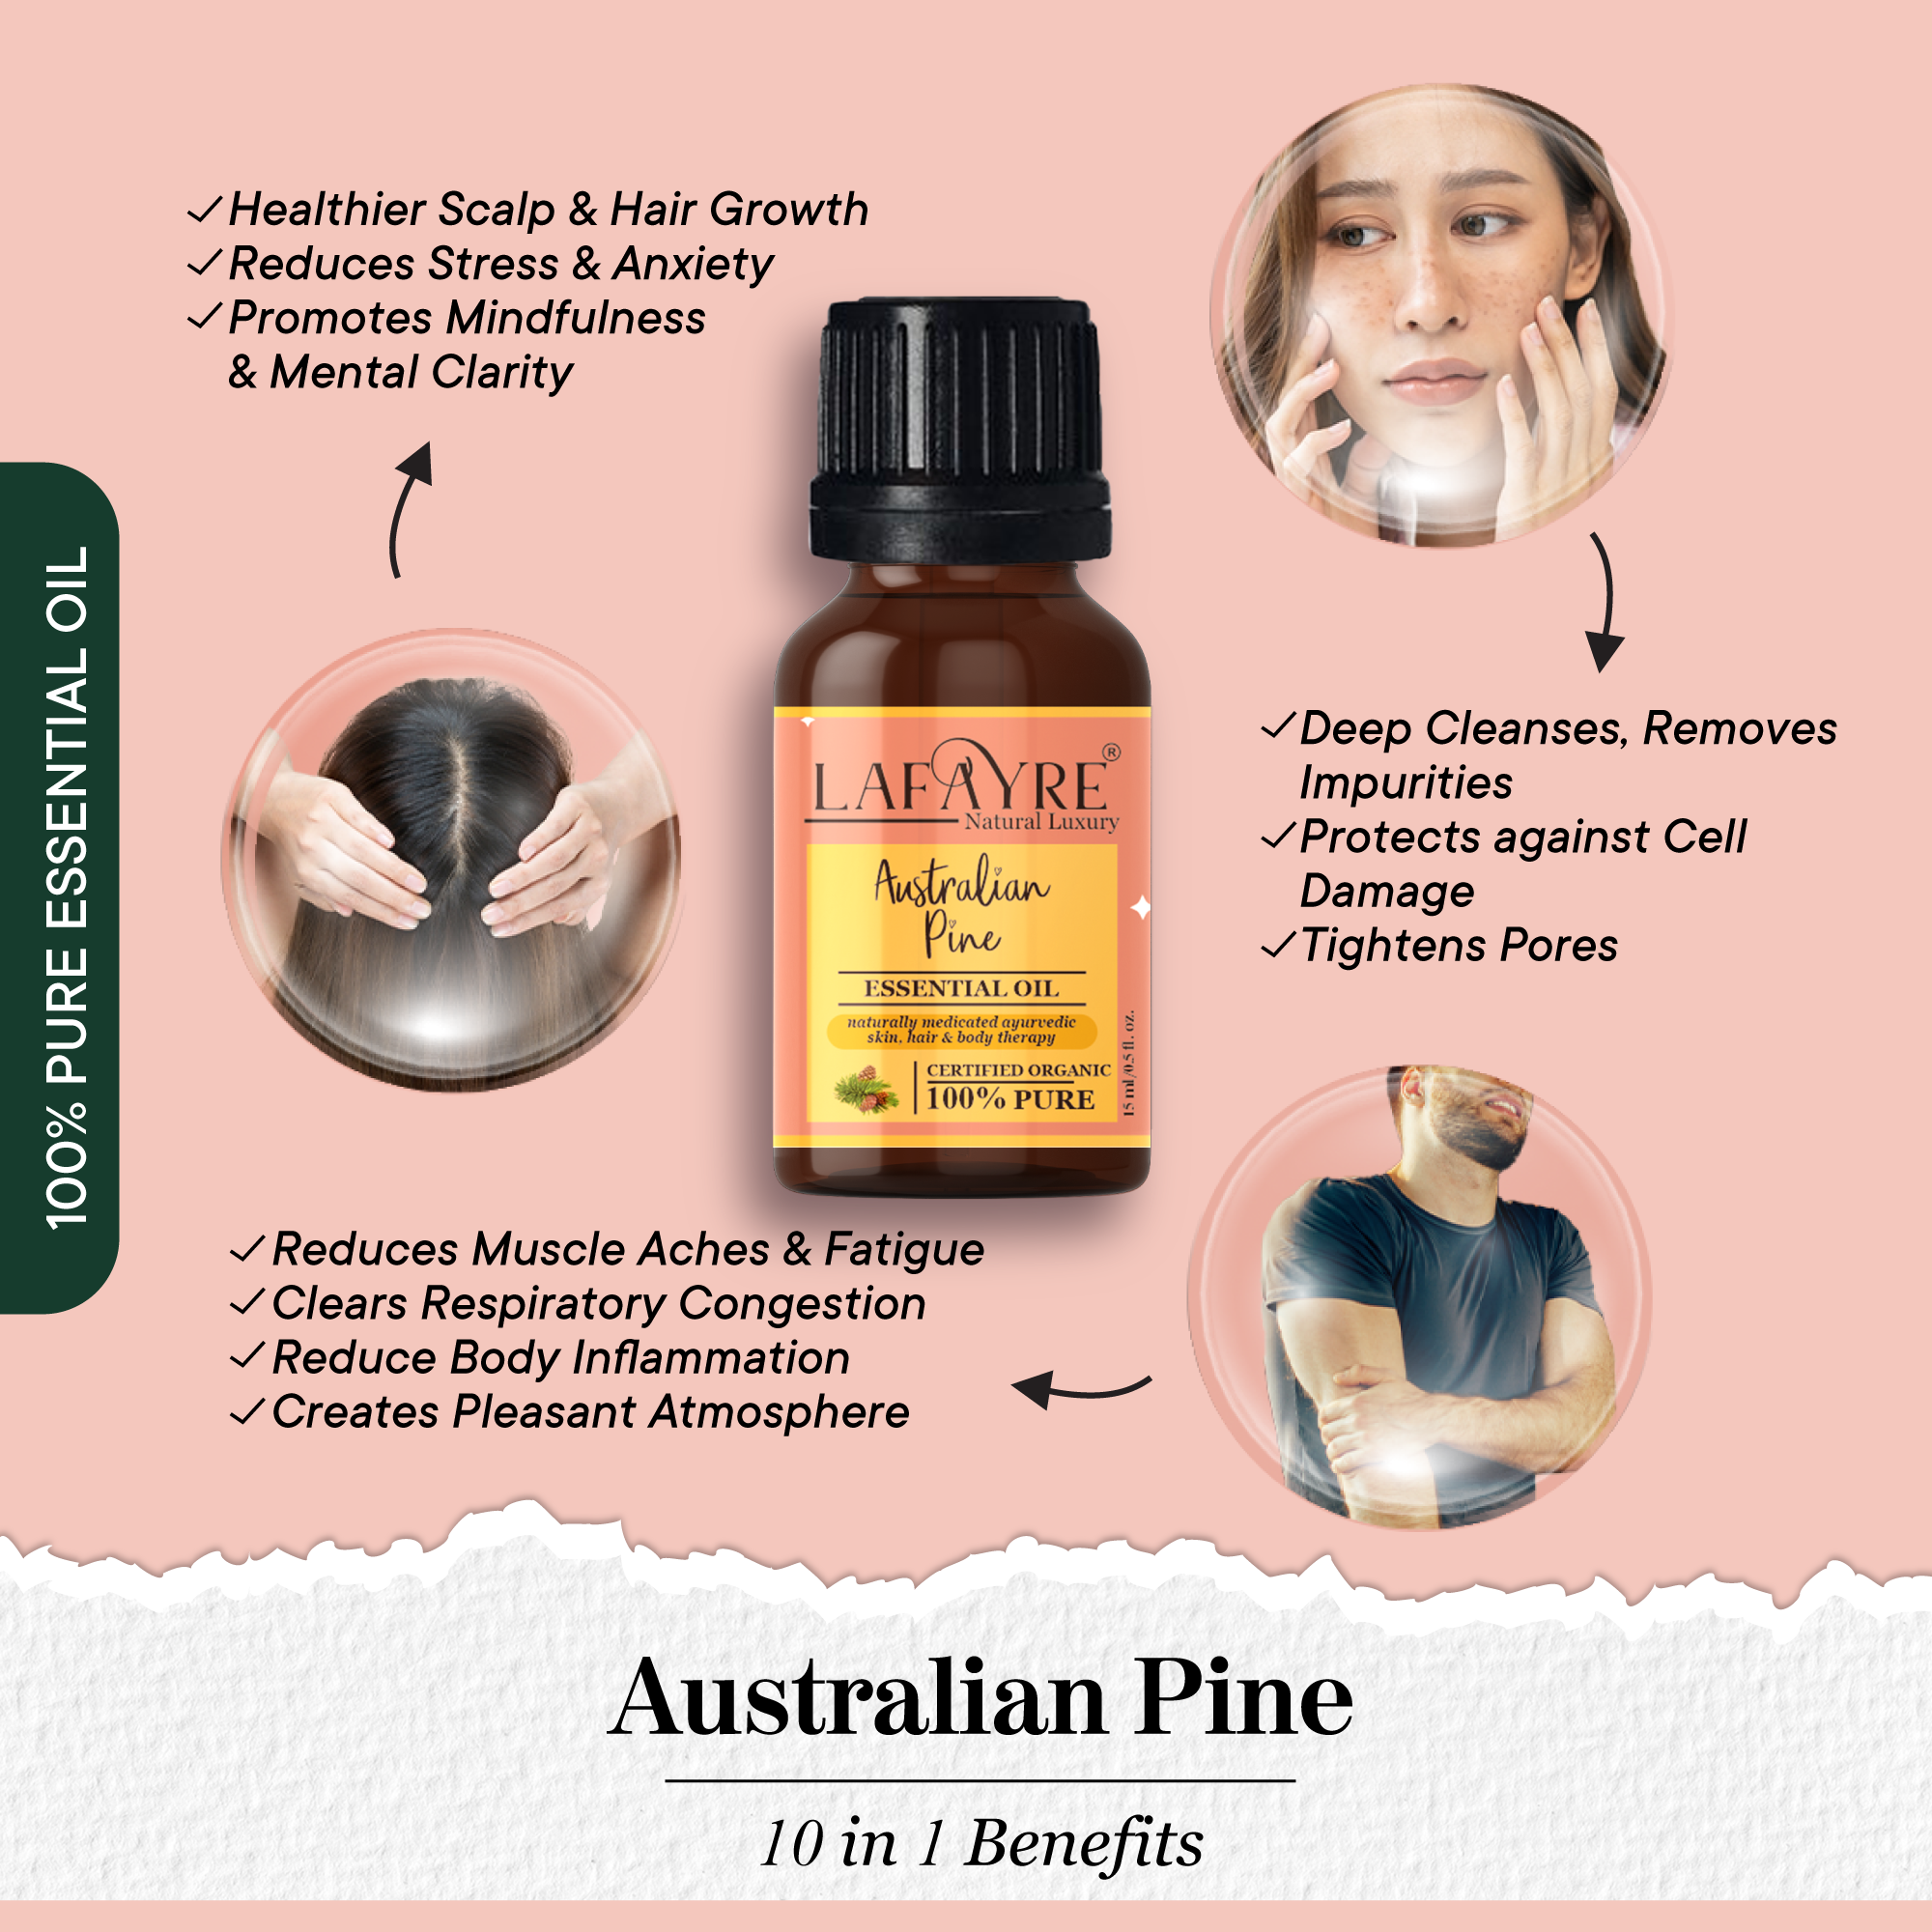 Australian Pine Oil Benefits